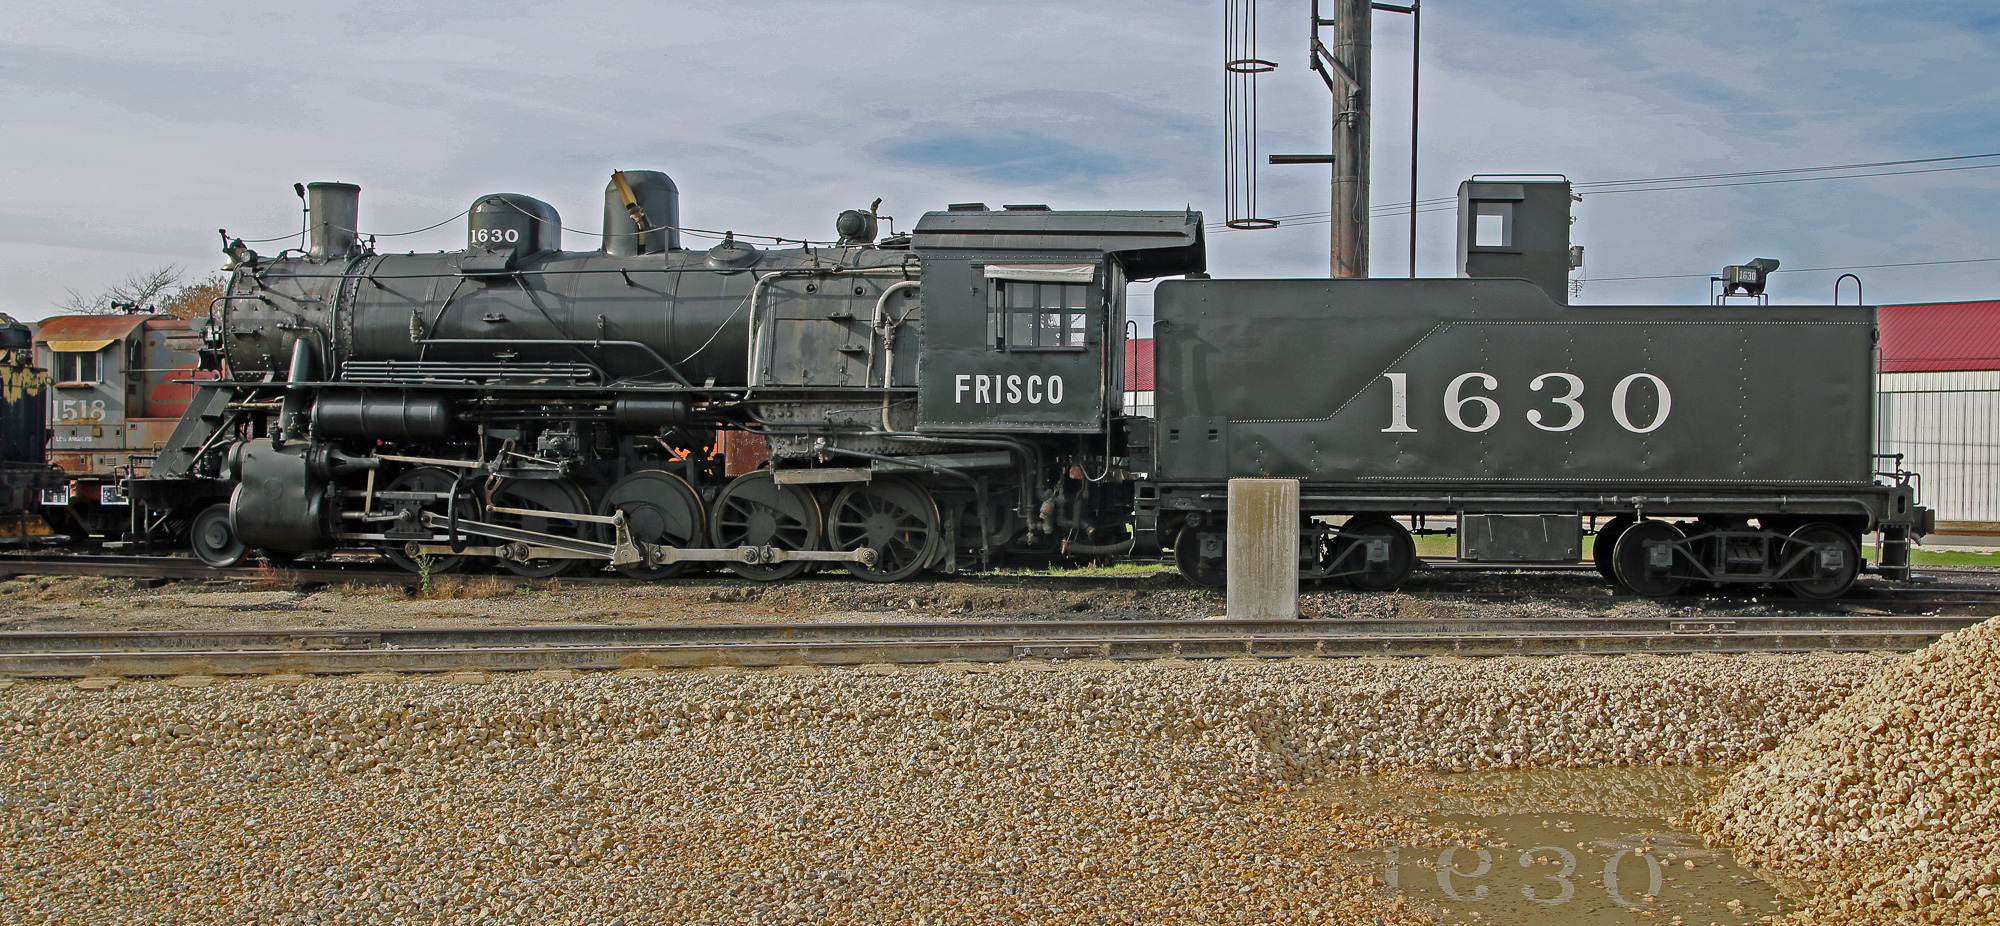 Train_Steam_Engine_684_IMG_1648_sm